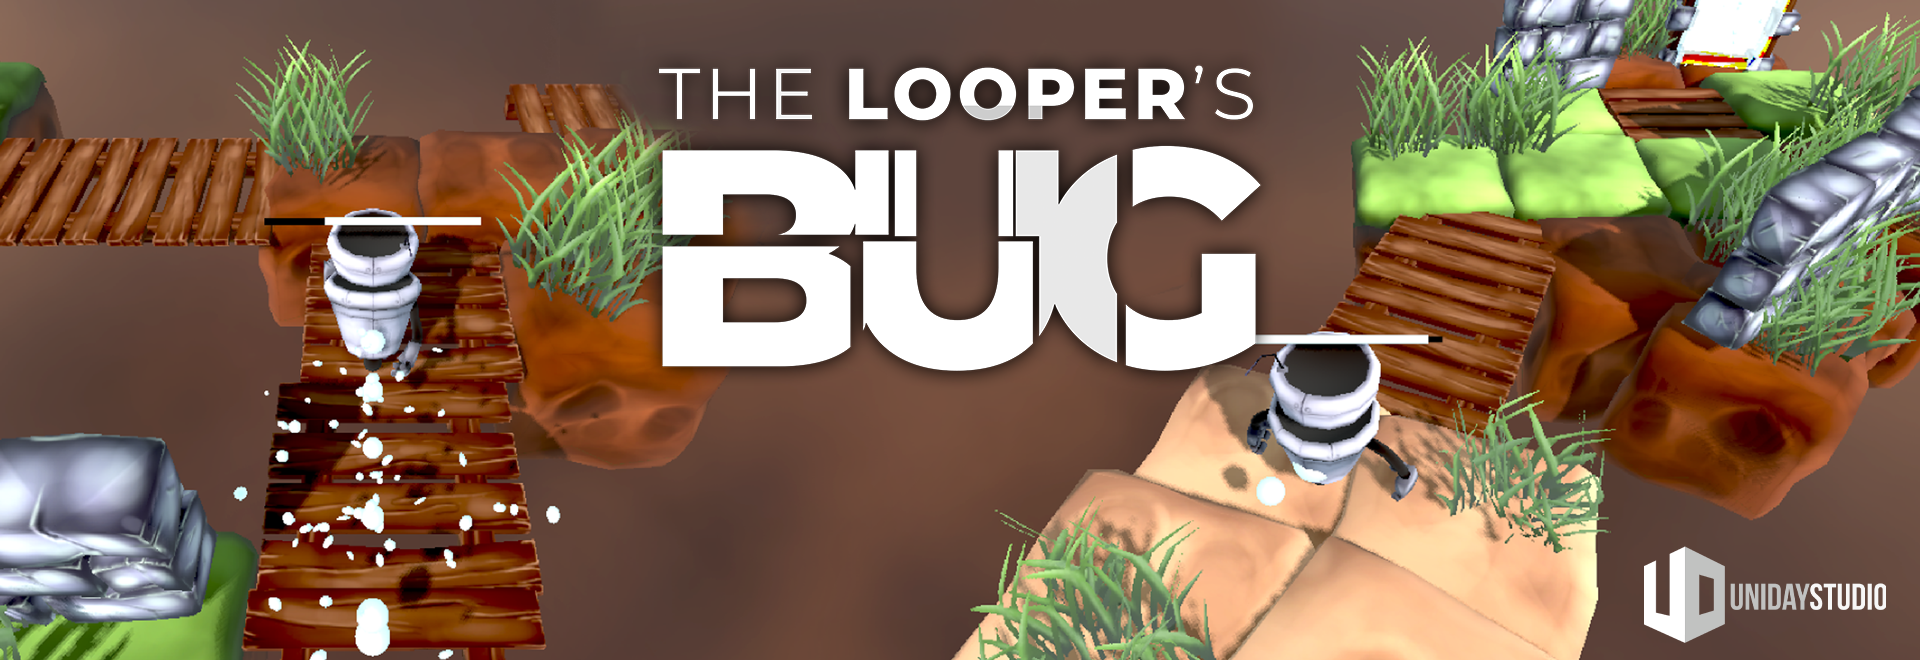 The Looper's BUG